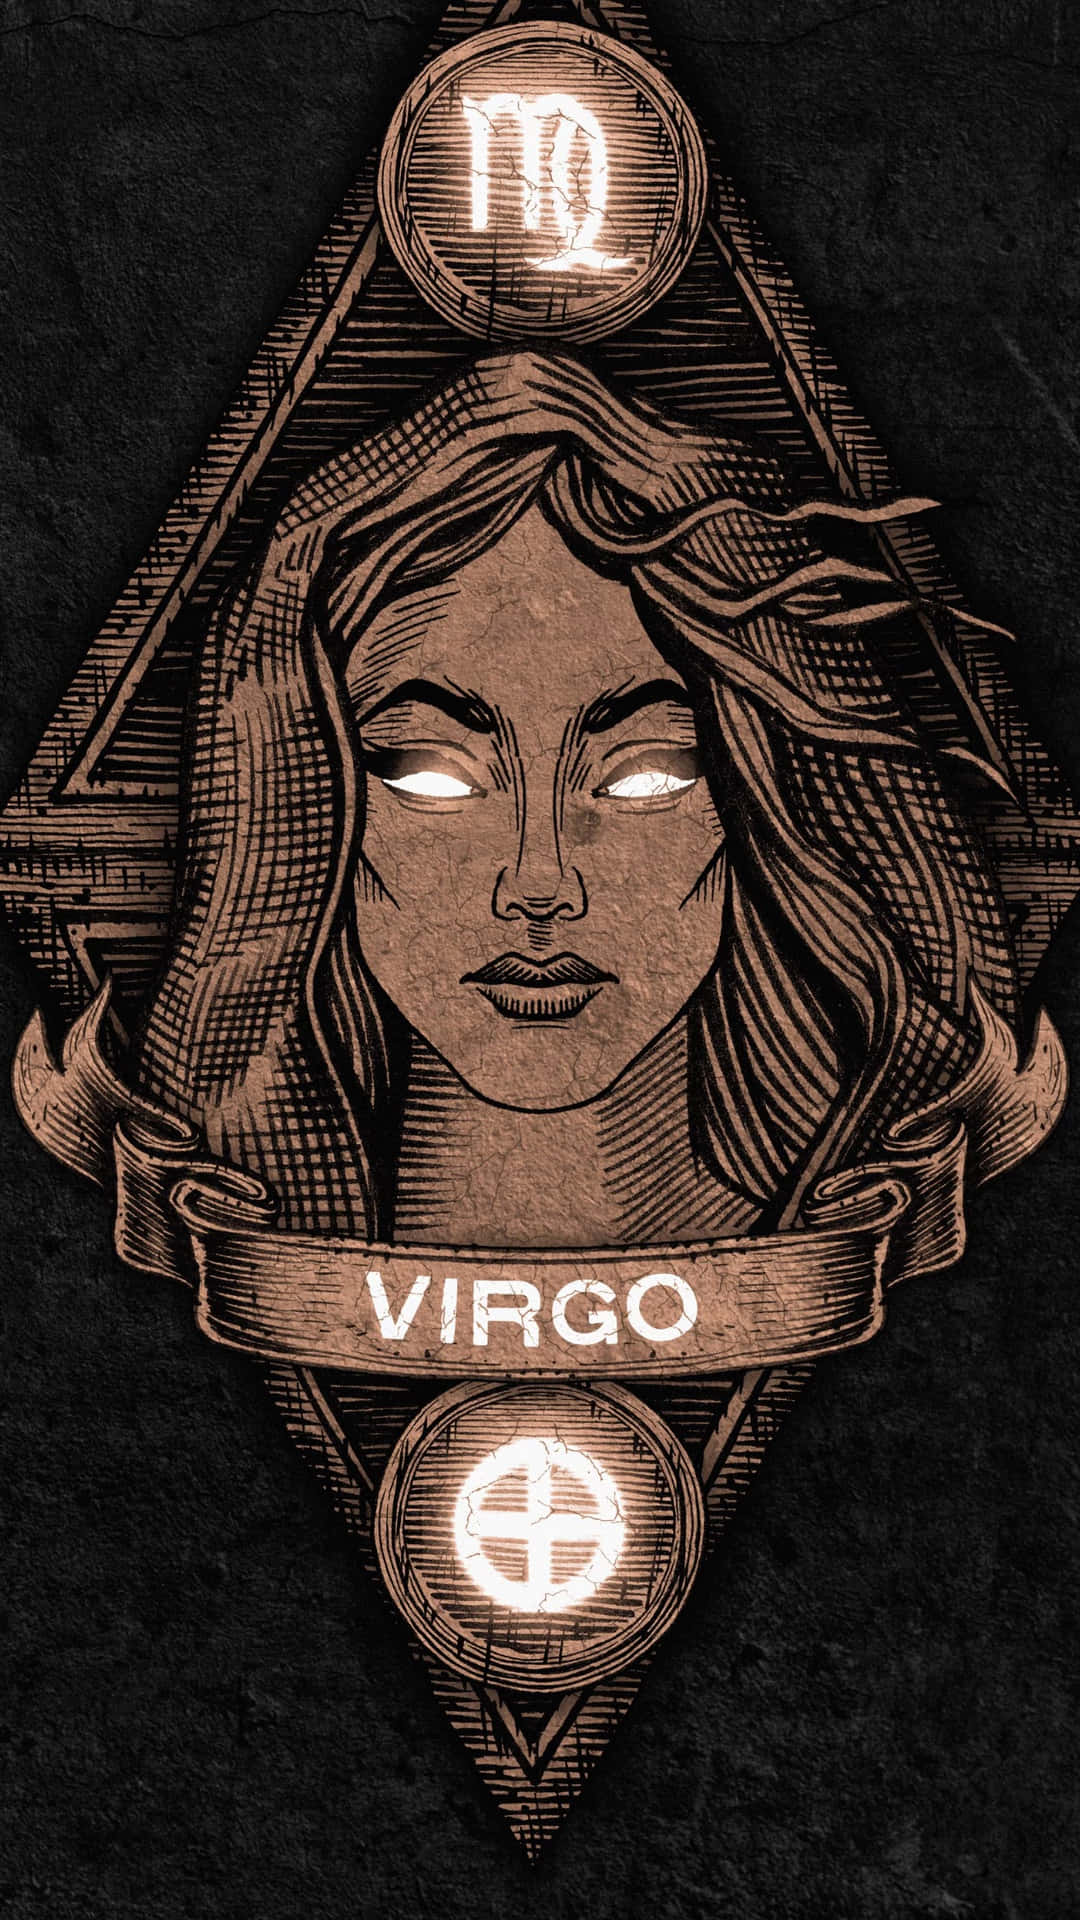 The Virgin, symbolizing Virgo the Zodiac sign